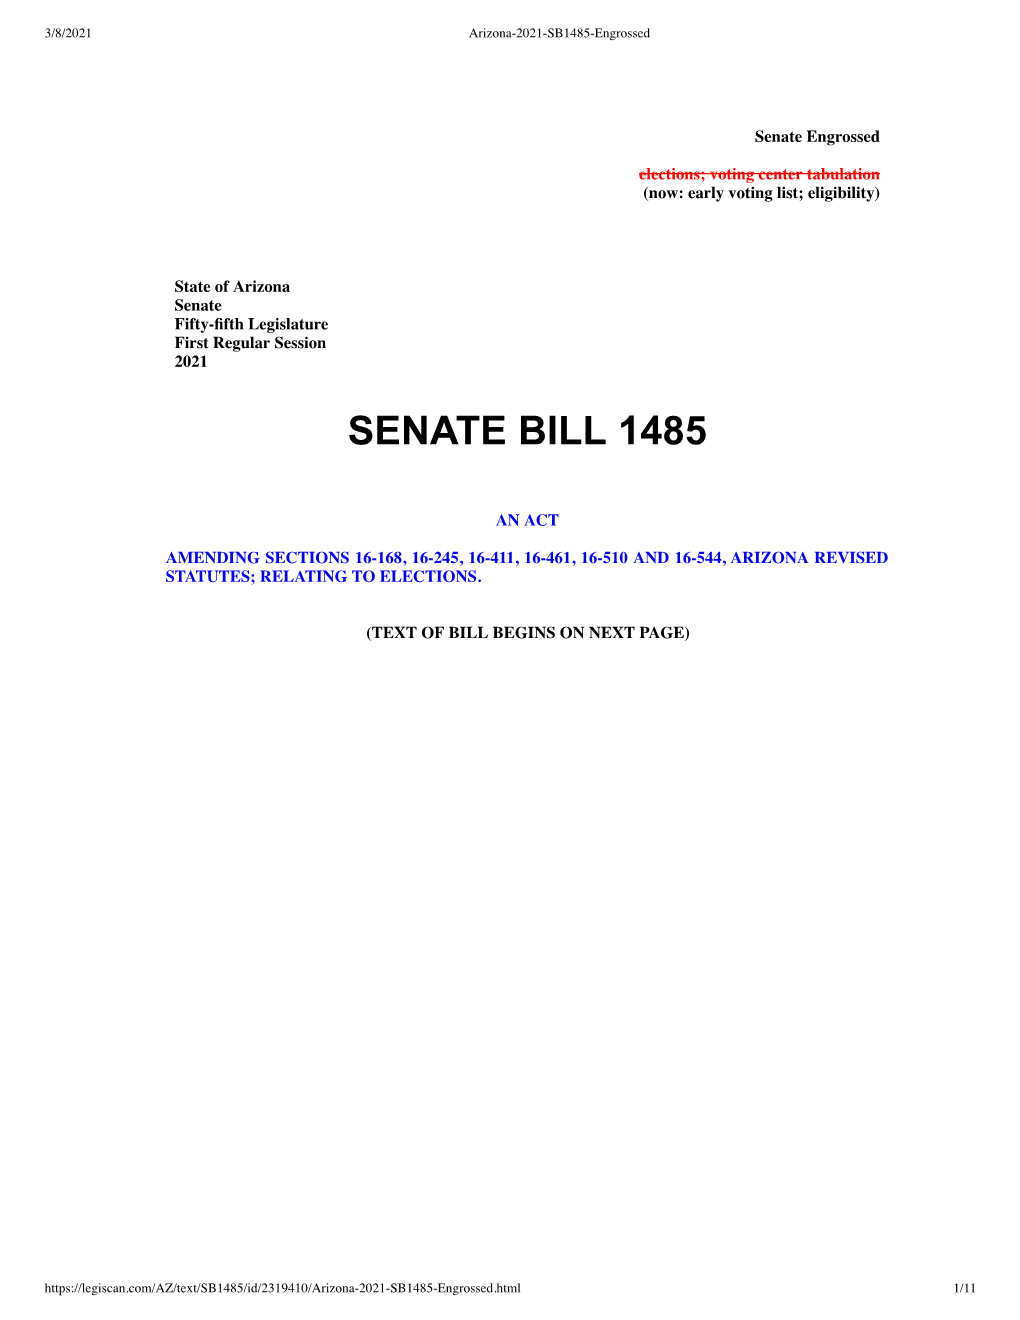 Senate Bill 1485